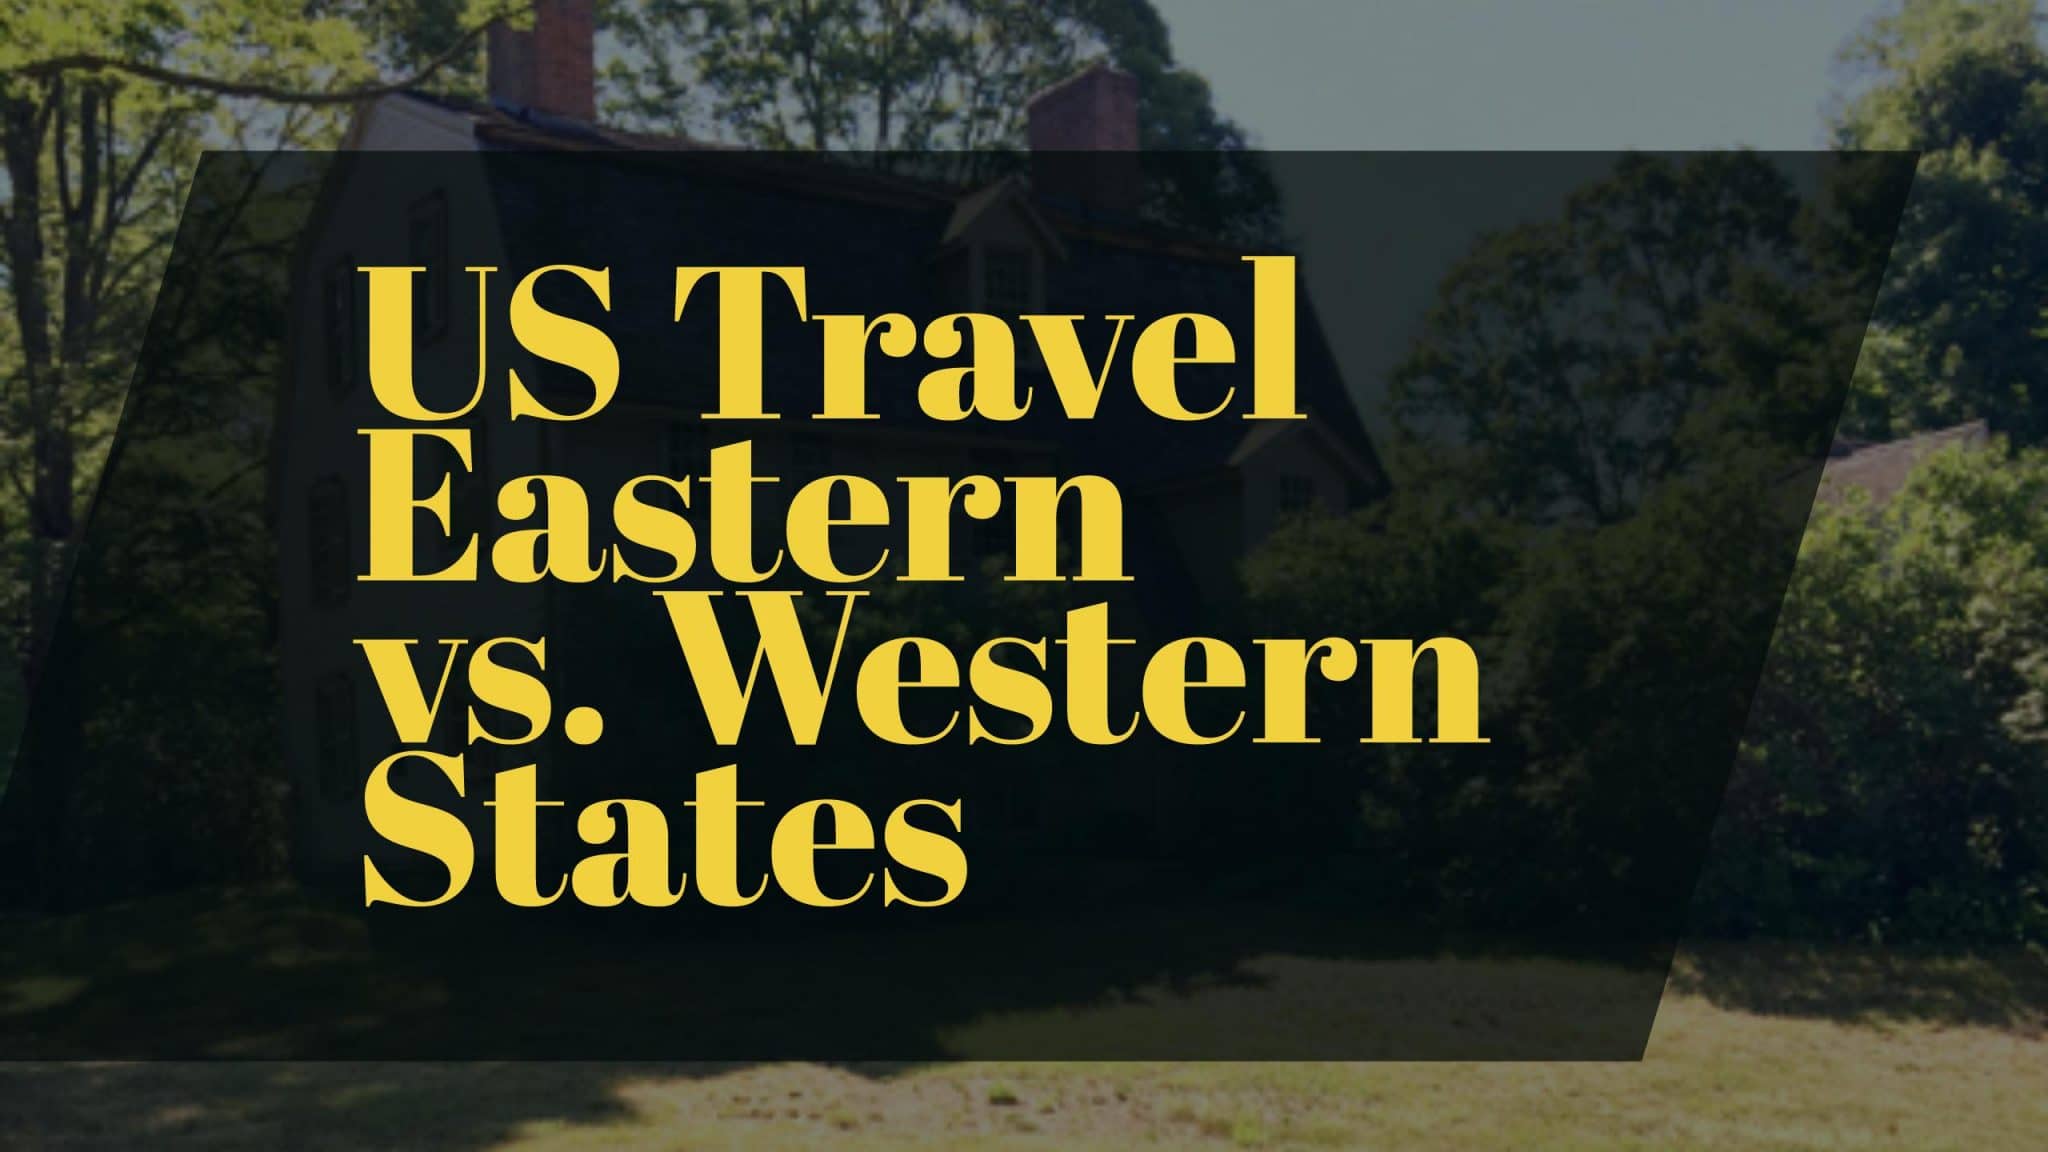 US Travel Eastern vs. Western States